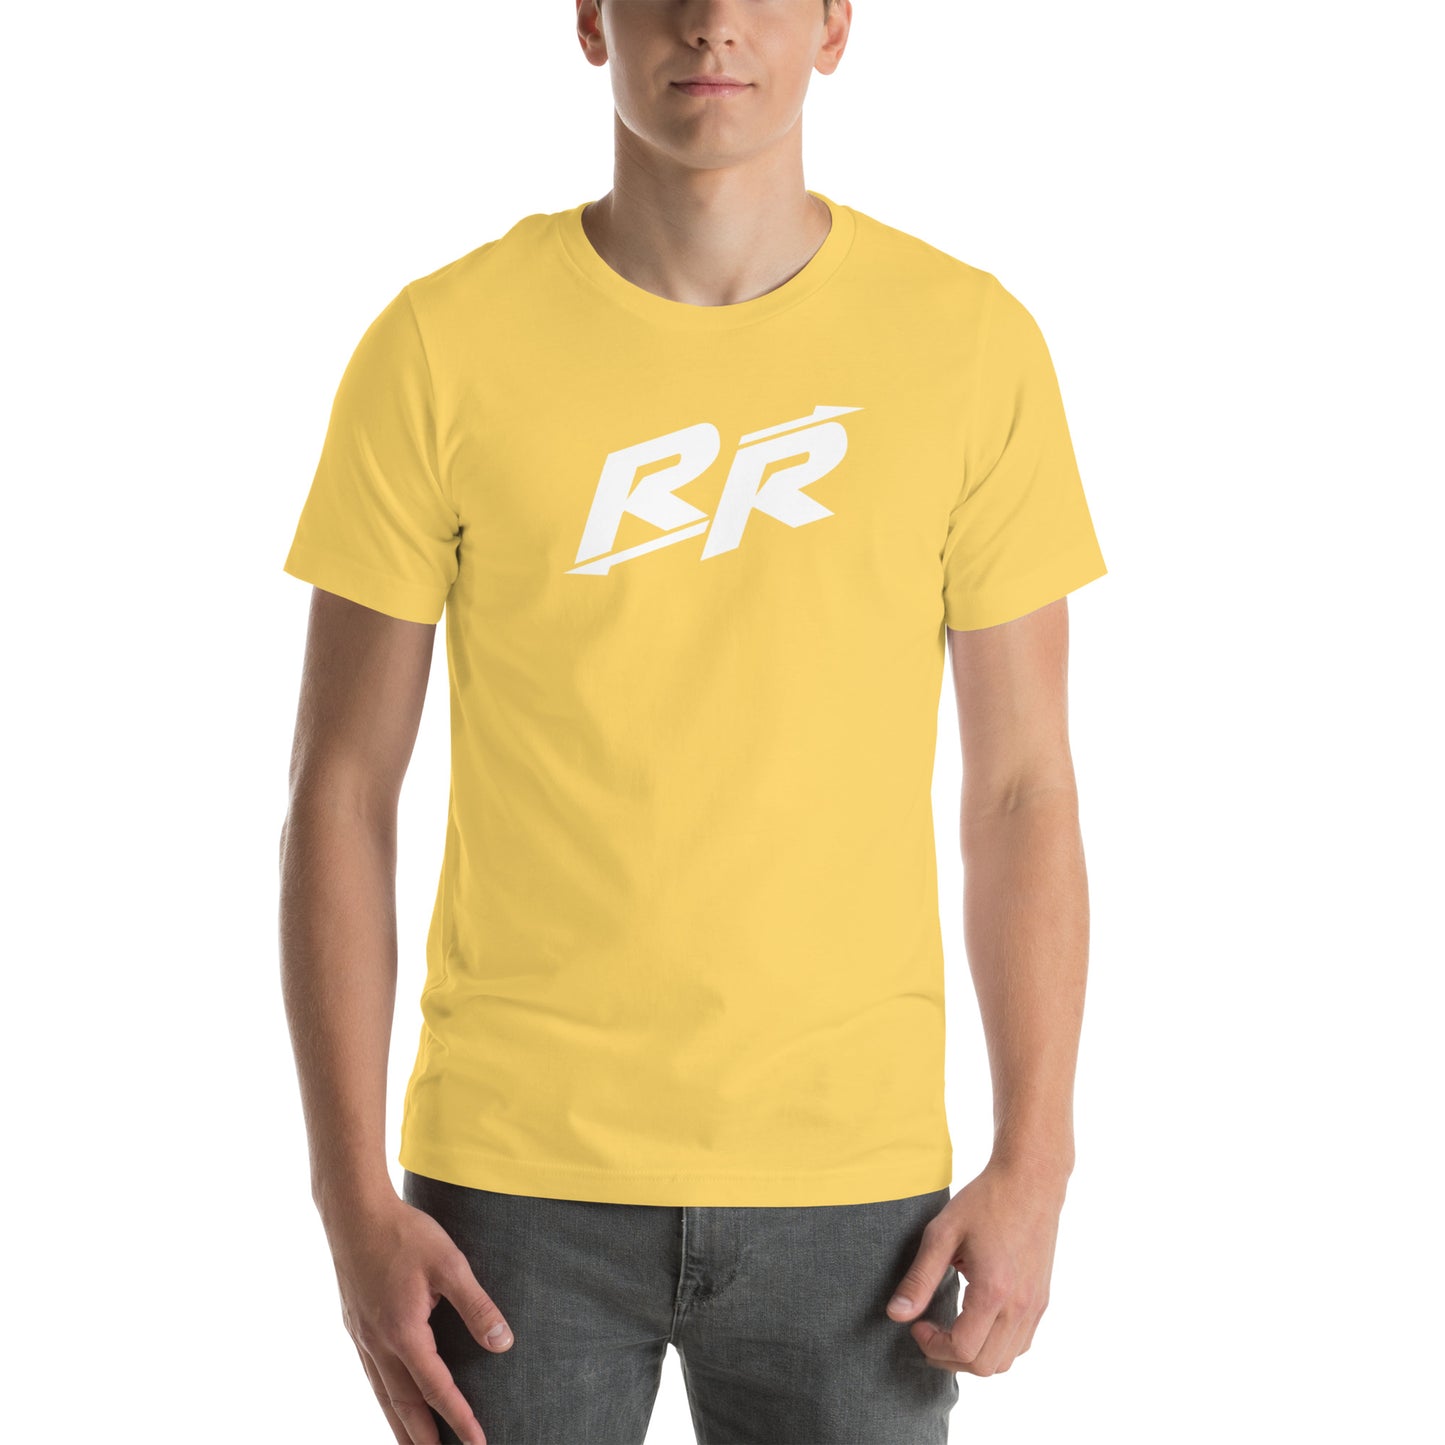 RR Team T-Shirt